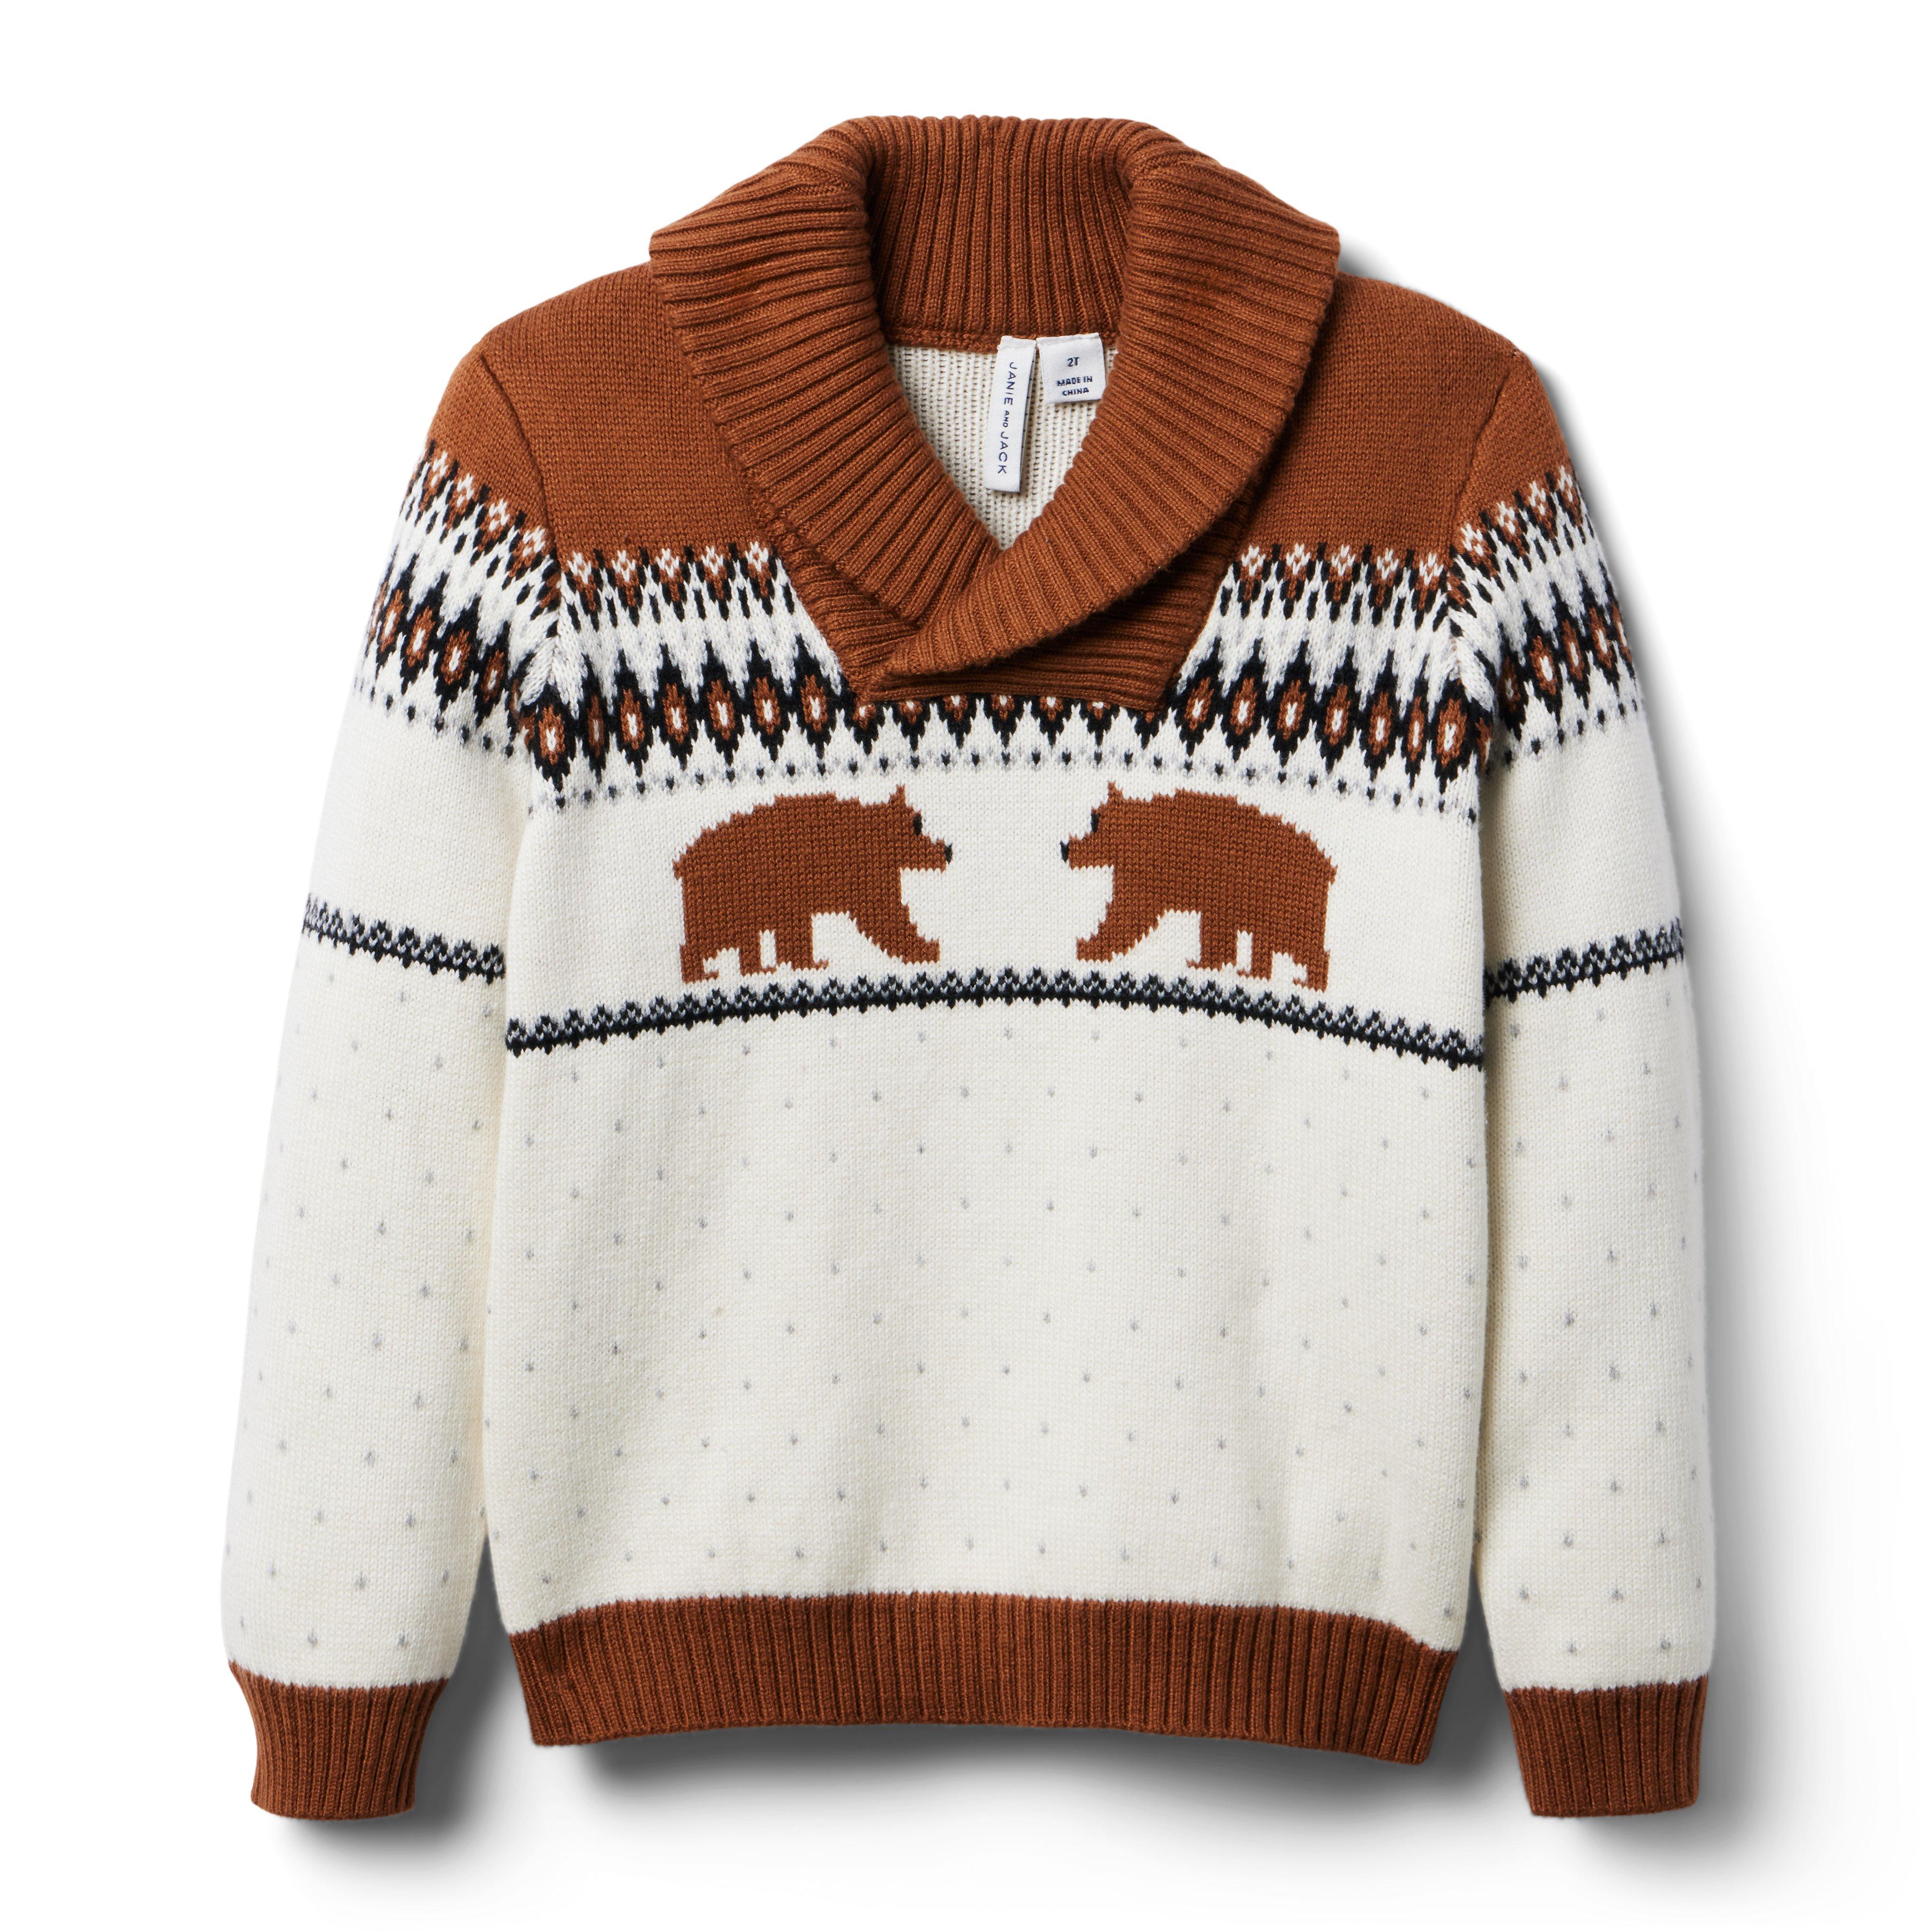 textured sweater + my favorite sherpa jacket - Stripes in Bloom